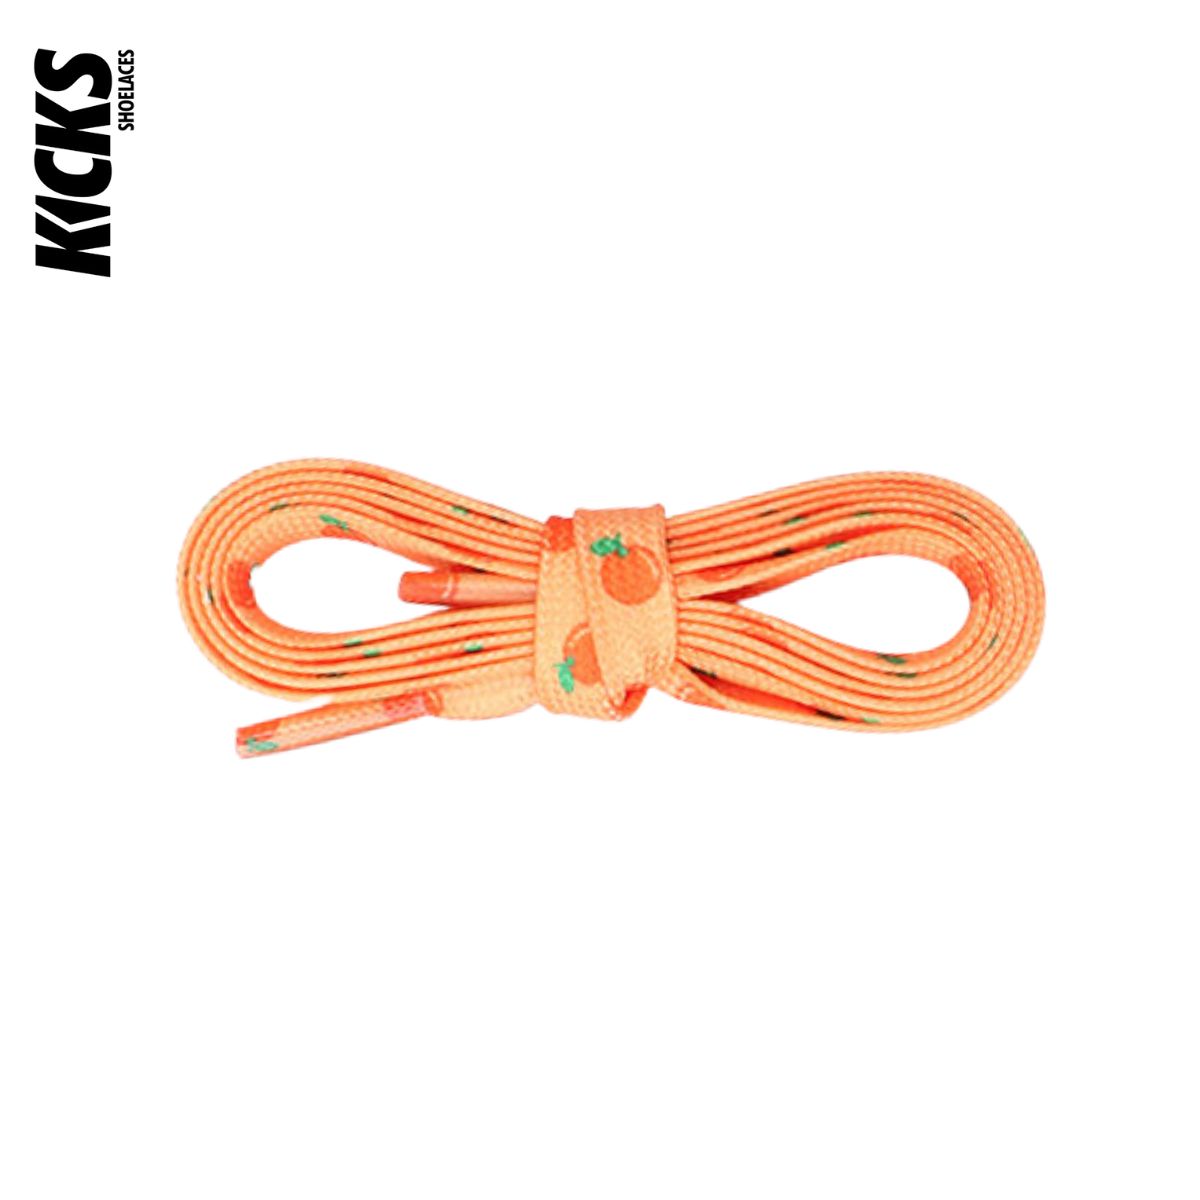 Fruit Shoelaces - Kicks Shoelaces